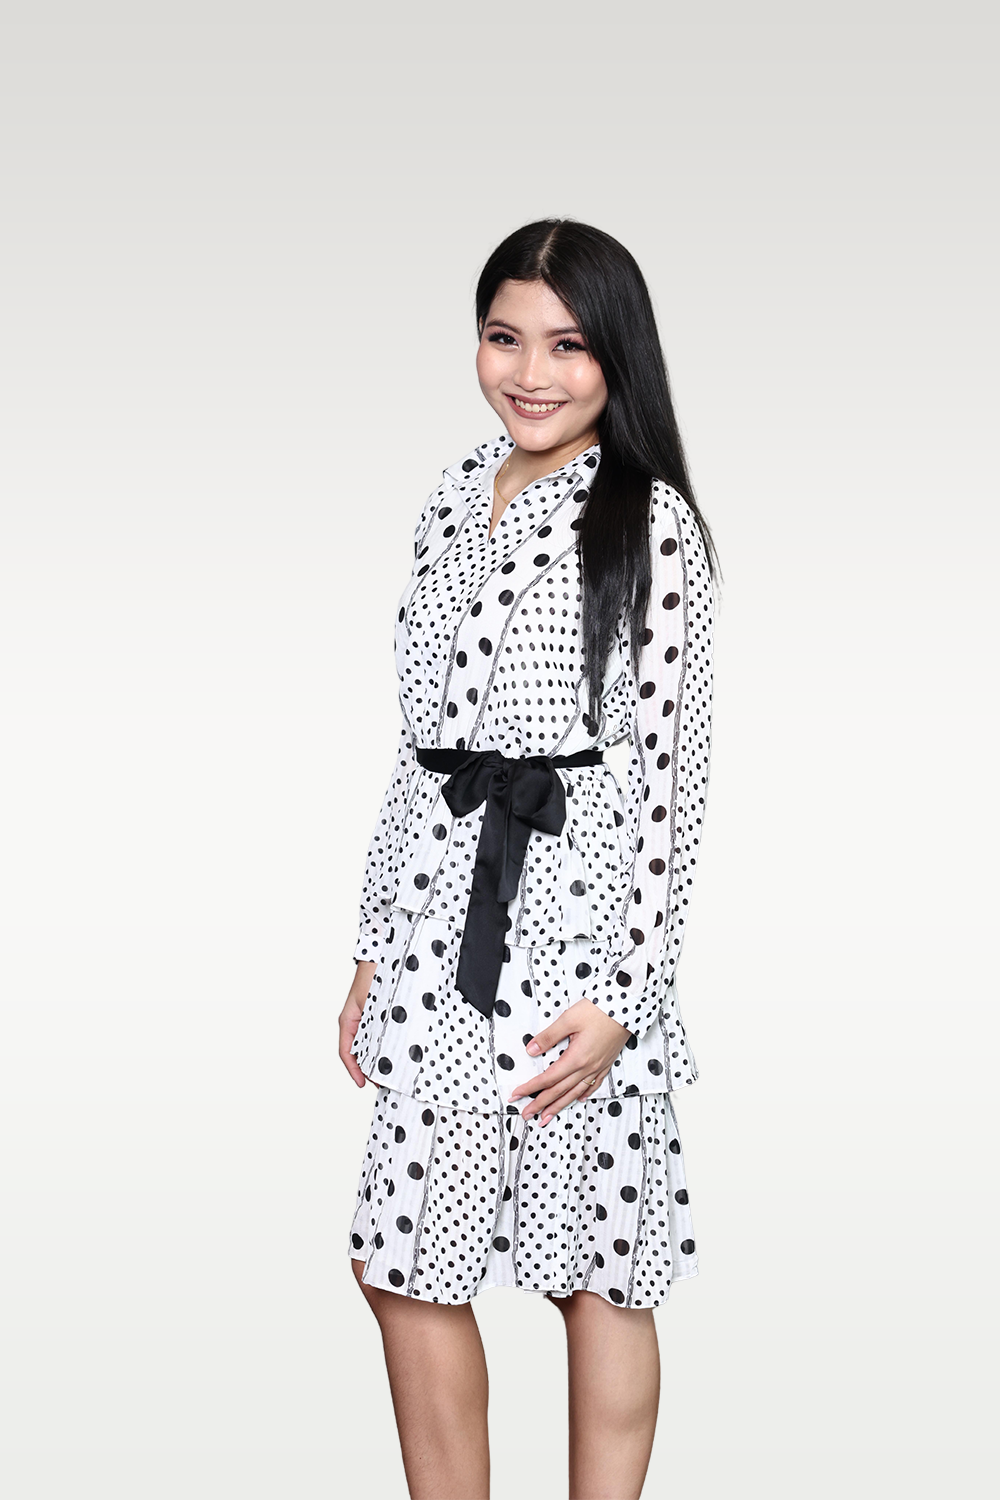 Alish Dotted White & Black Polka Short Dress RMA